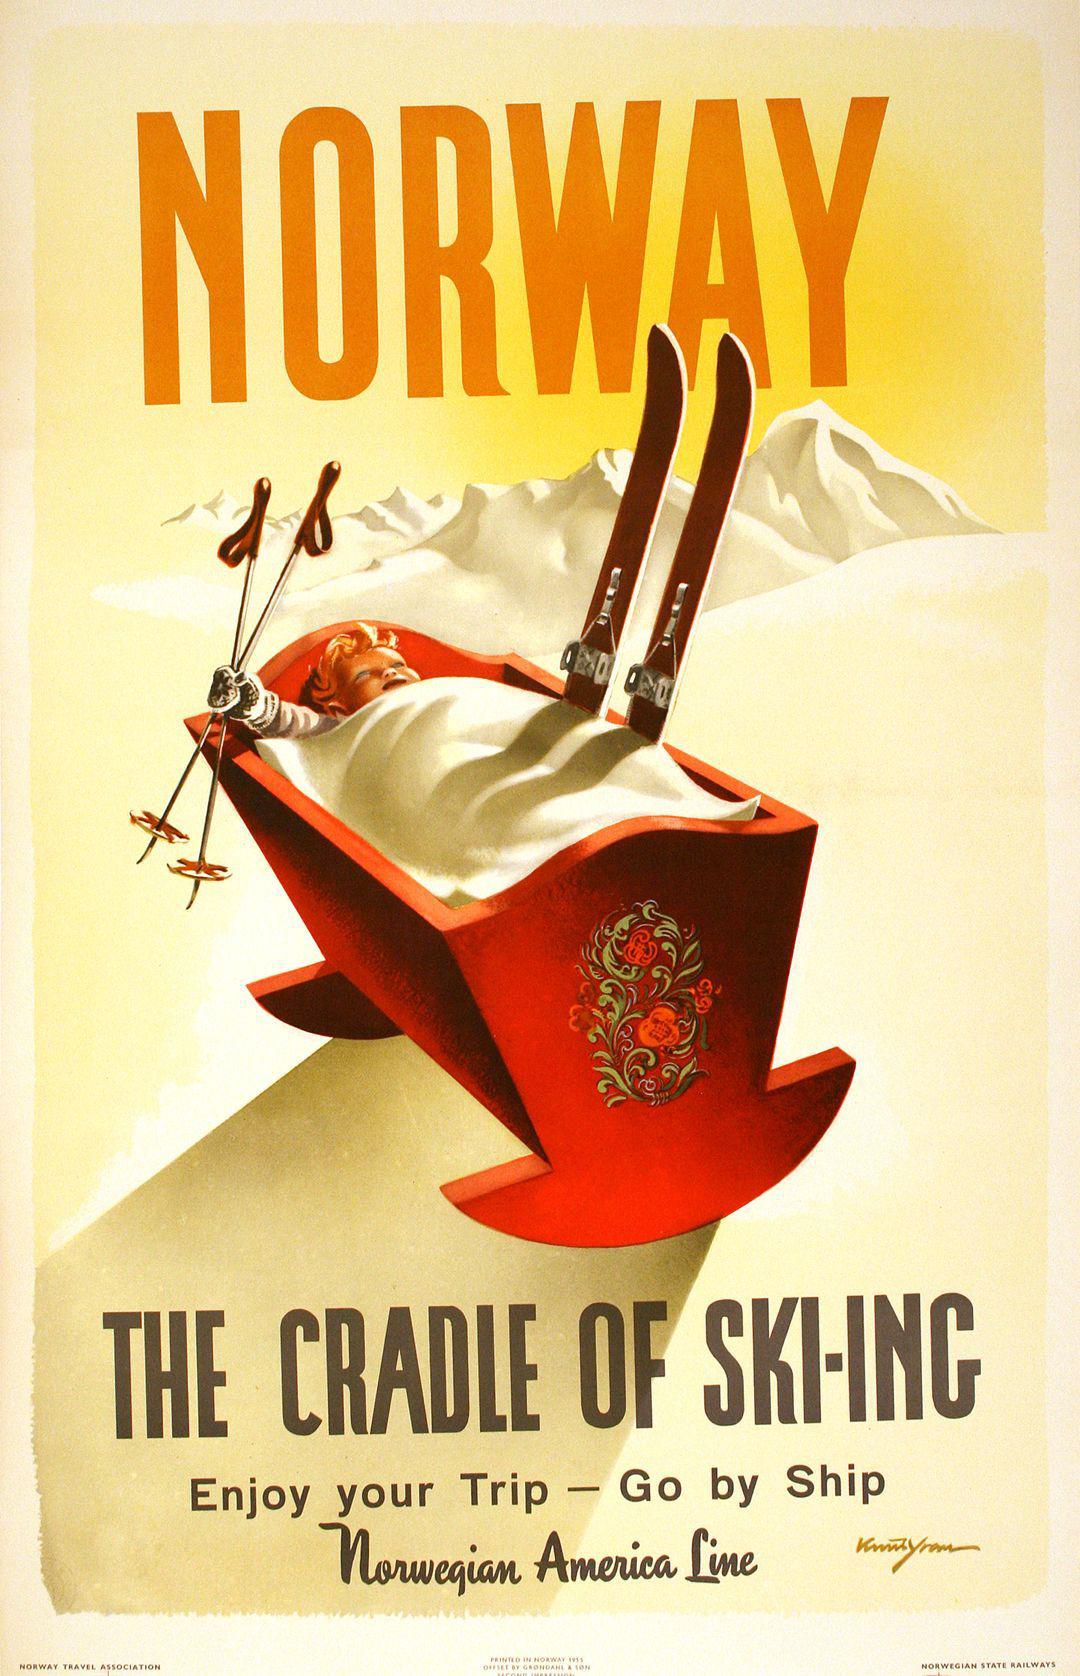 Norway The Cradle of Ski-Ing Original Poster 1955 for Norwegian American Lines by Knut Yran